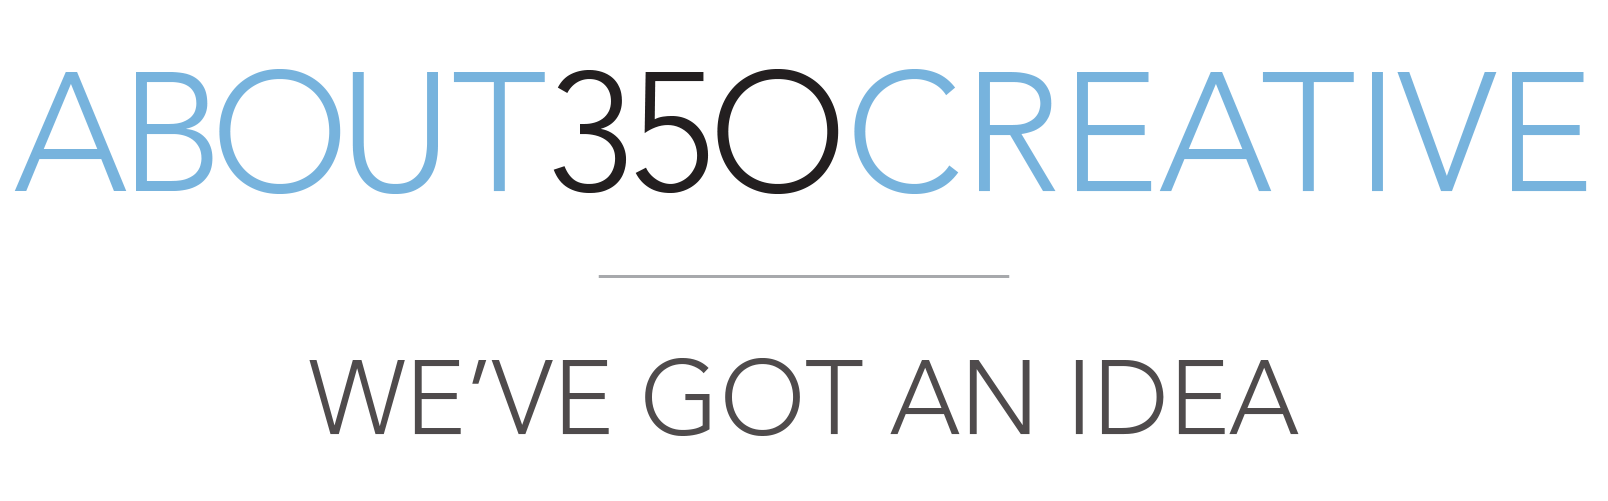 About350 Creative Logo